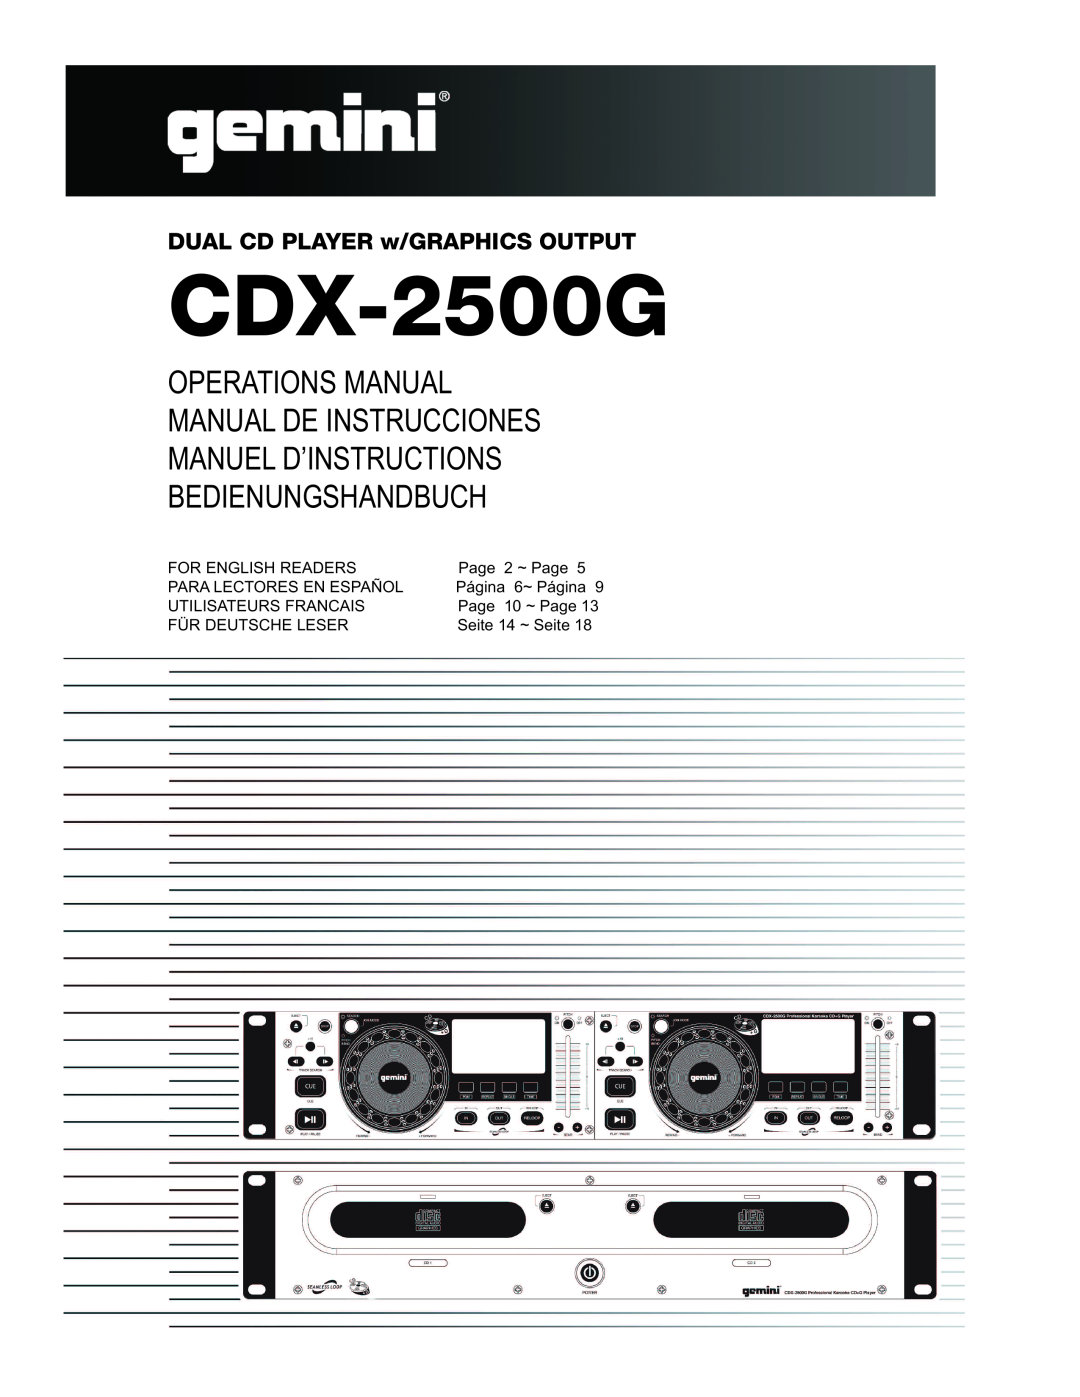 Gemini CDM-3700G manual Product Introduction, Professional Karaoke CD+G Players, CDX-2500G 